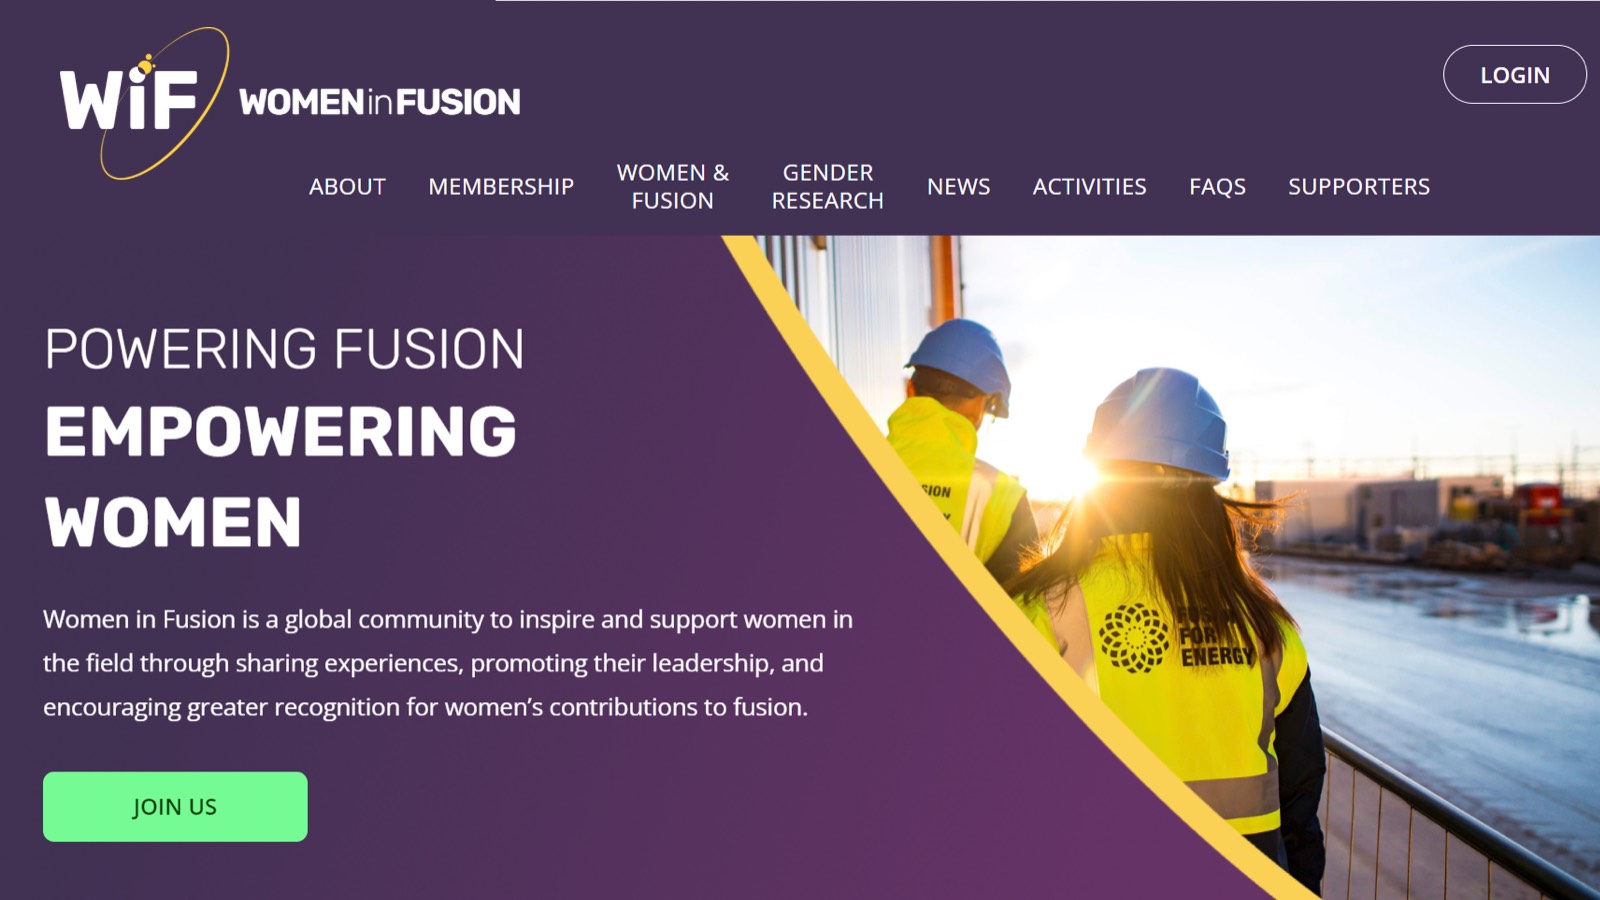 Women in Fusion – Powering fusion, empowering women.